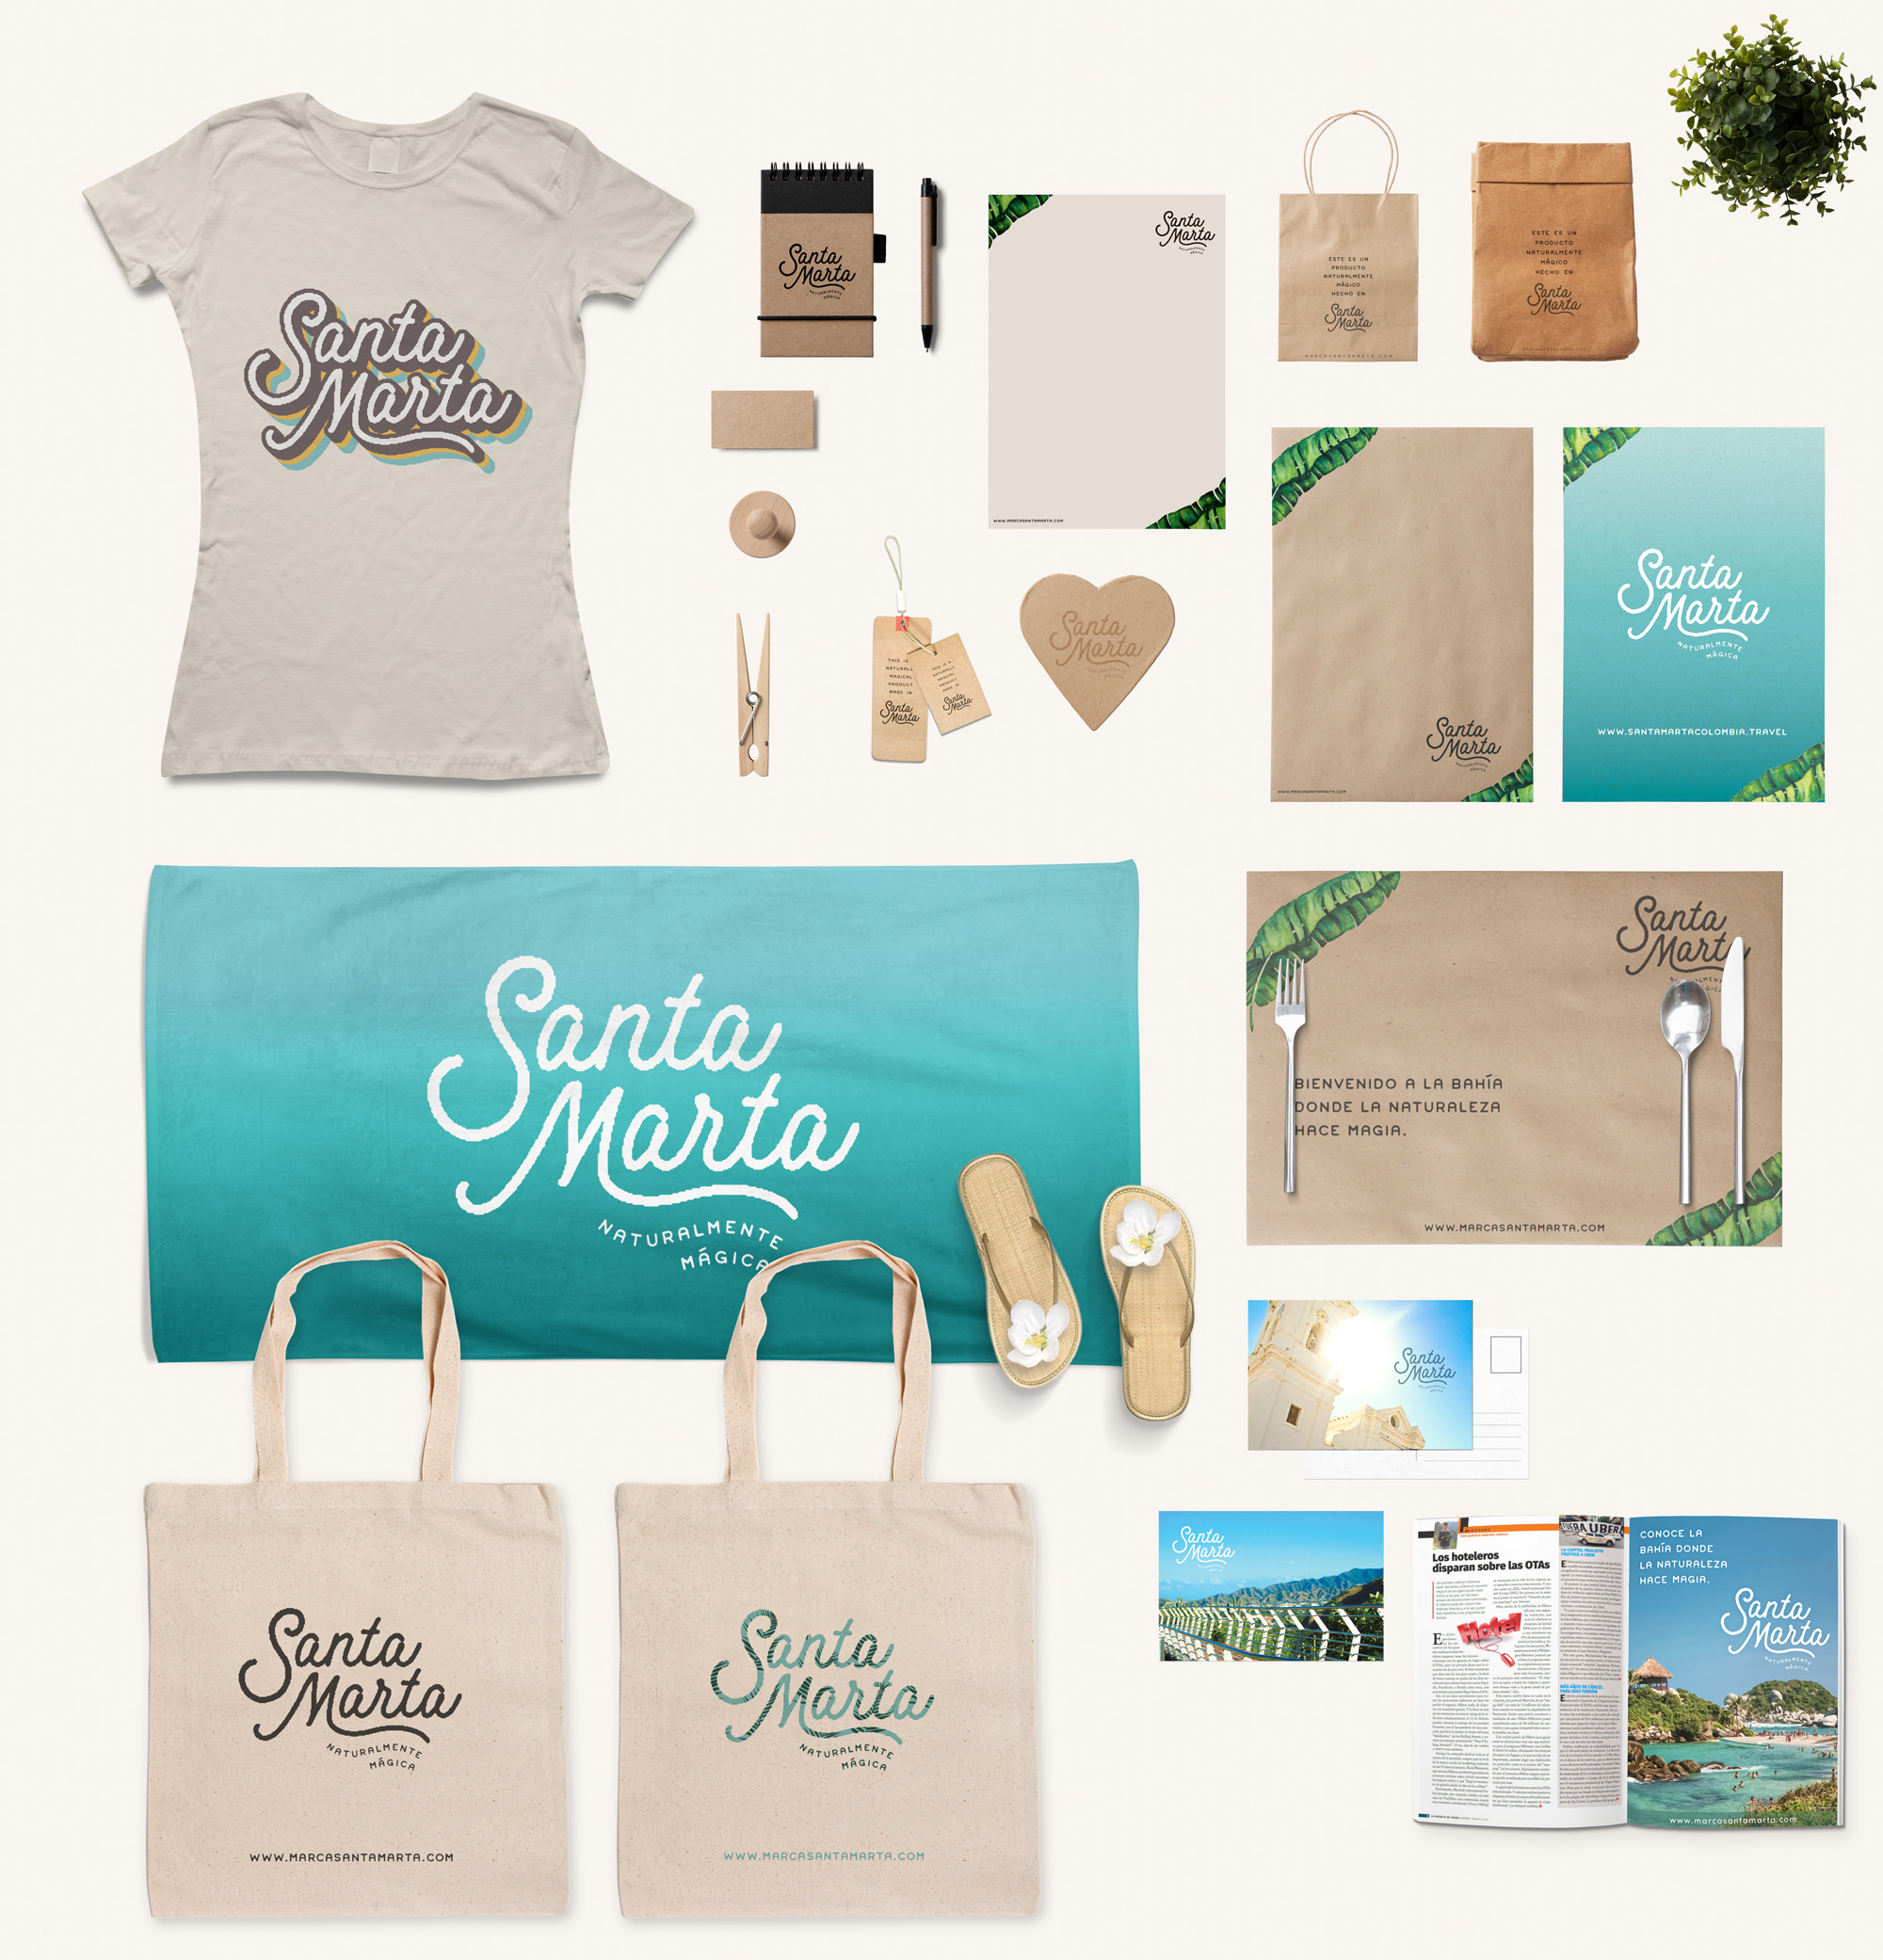 Santa Marta’s Brand System